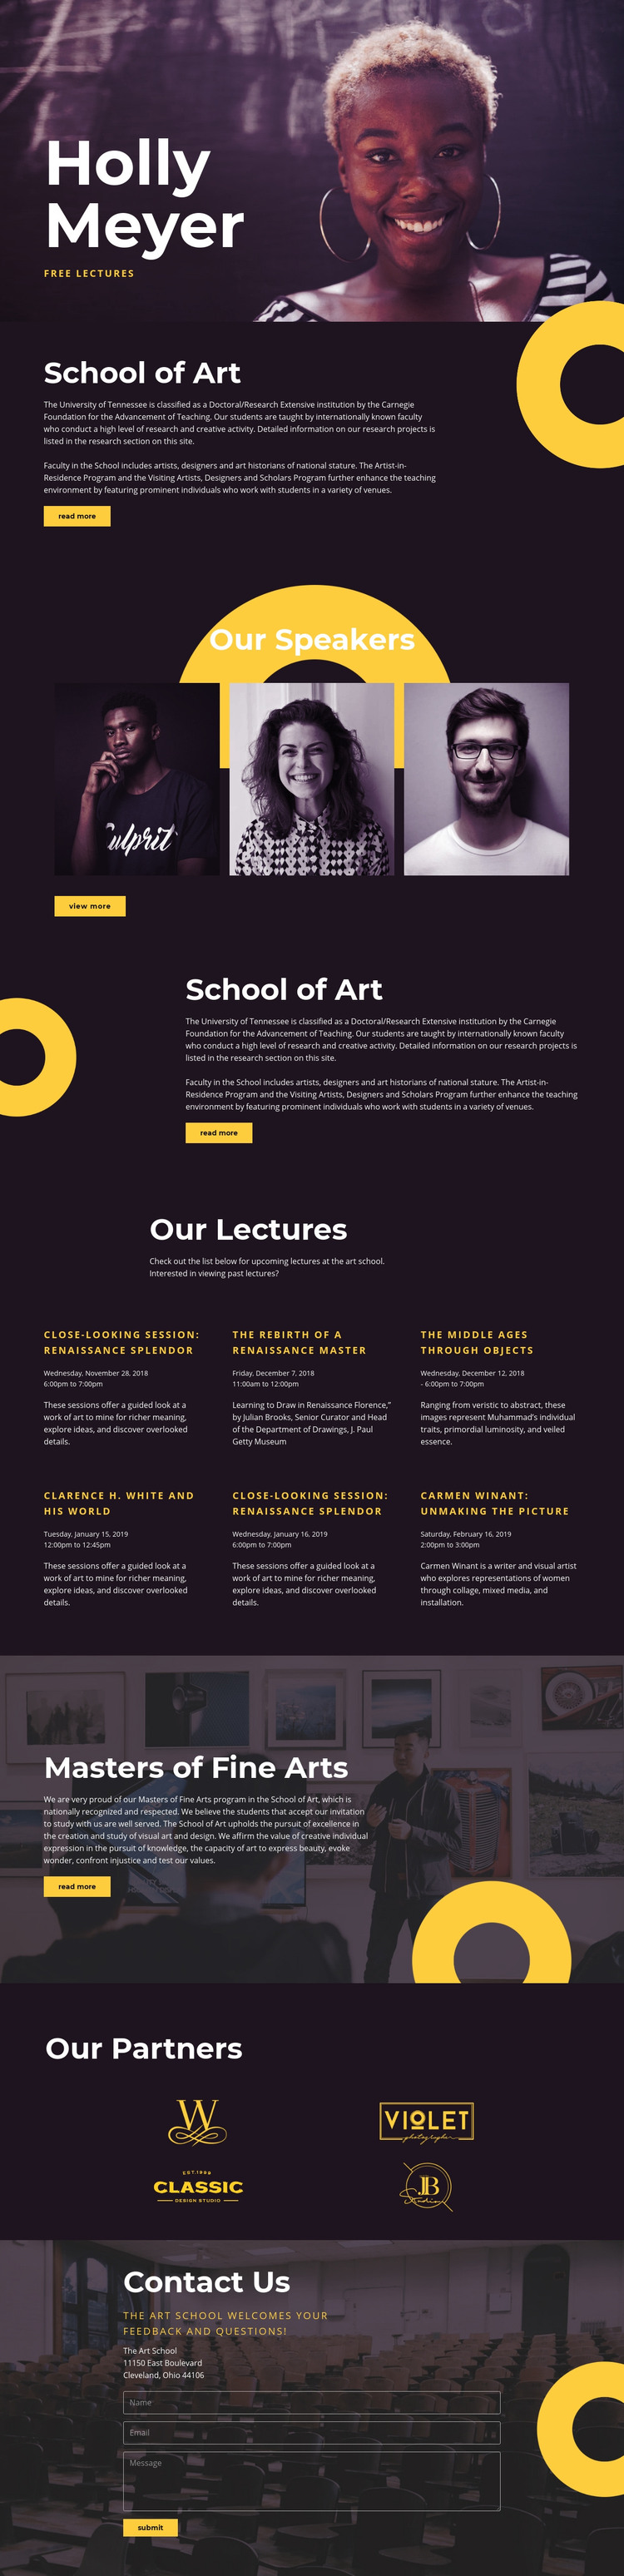 Holly Meyer Homepage Design